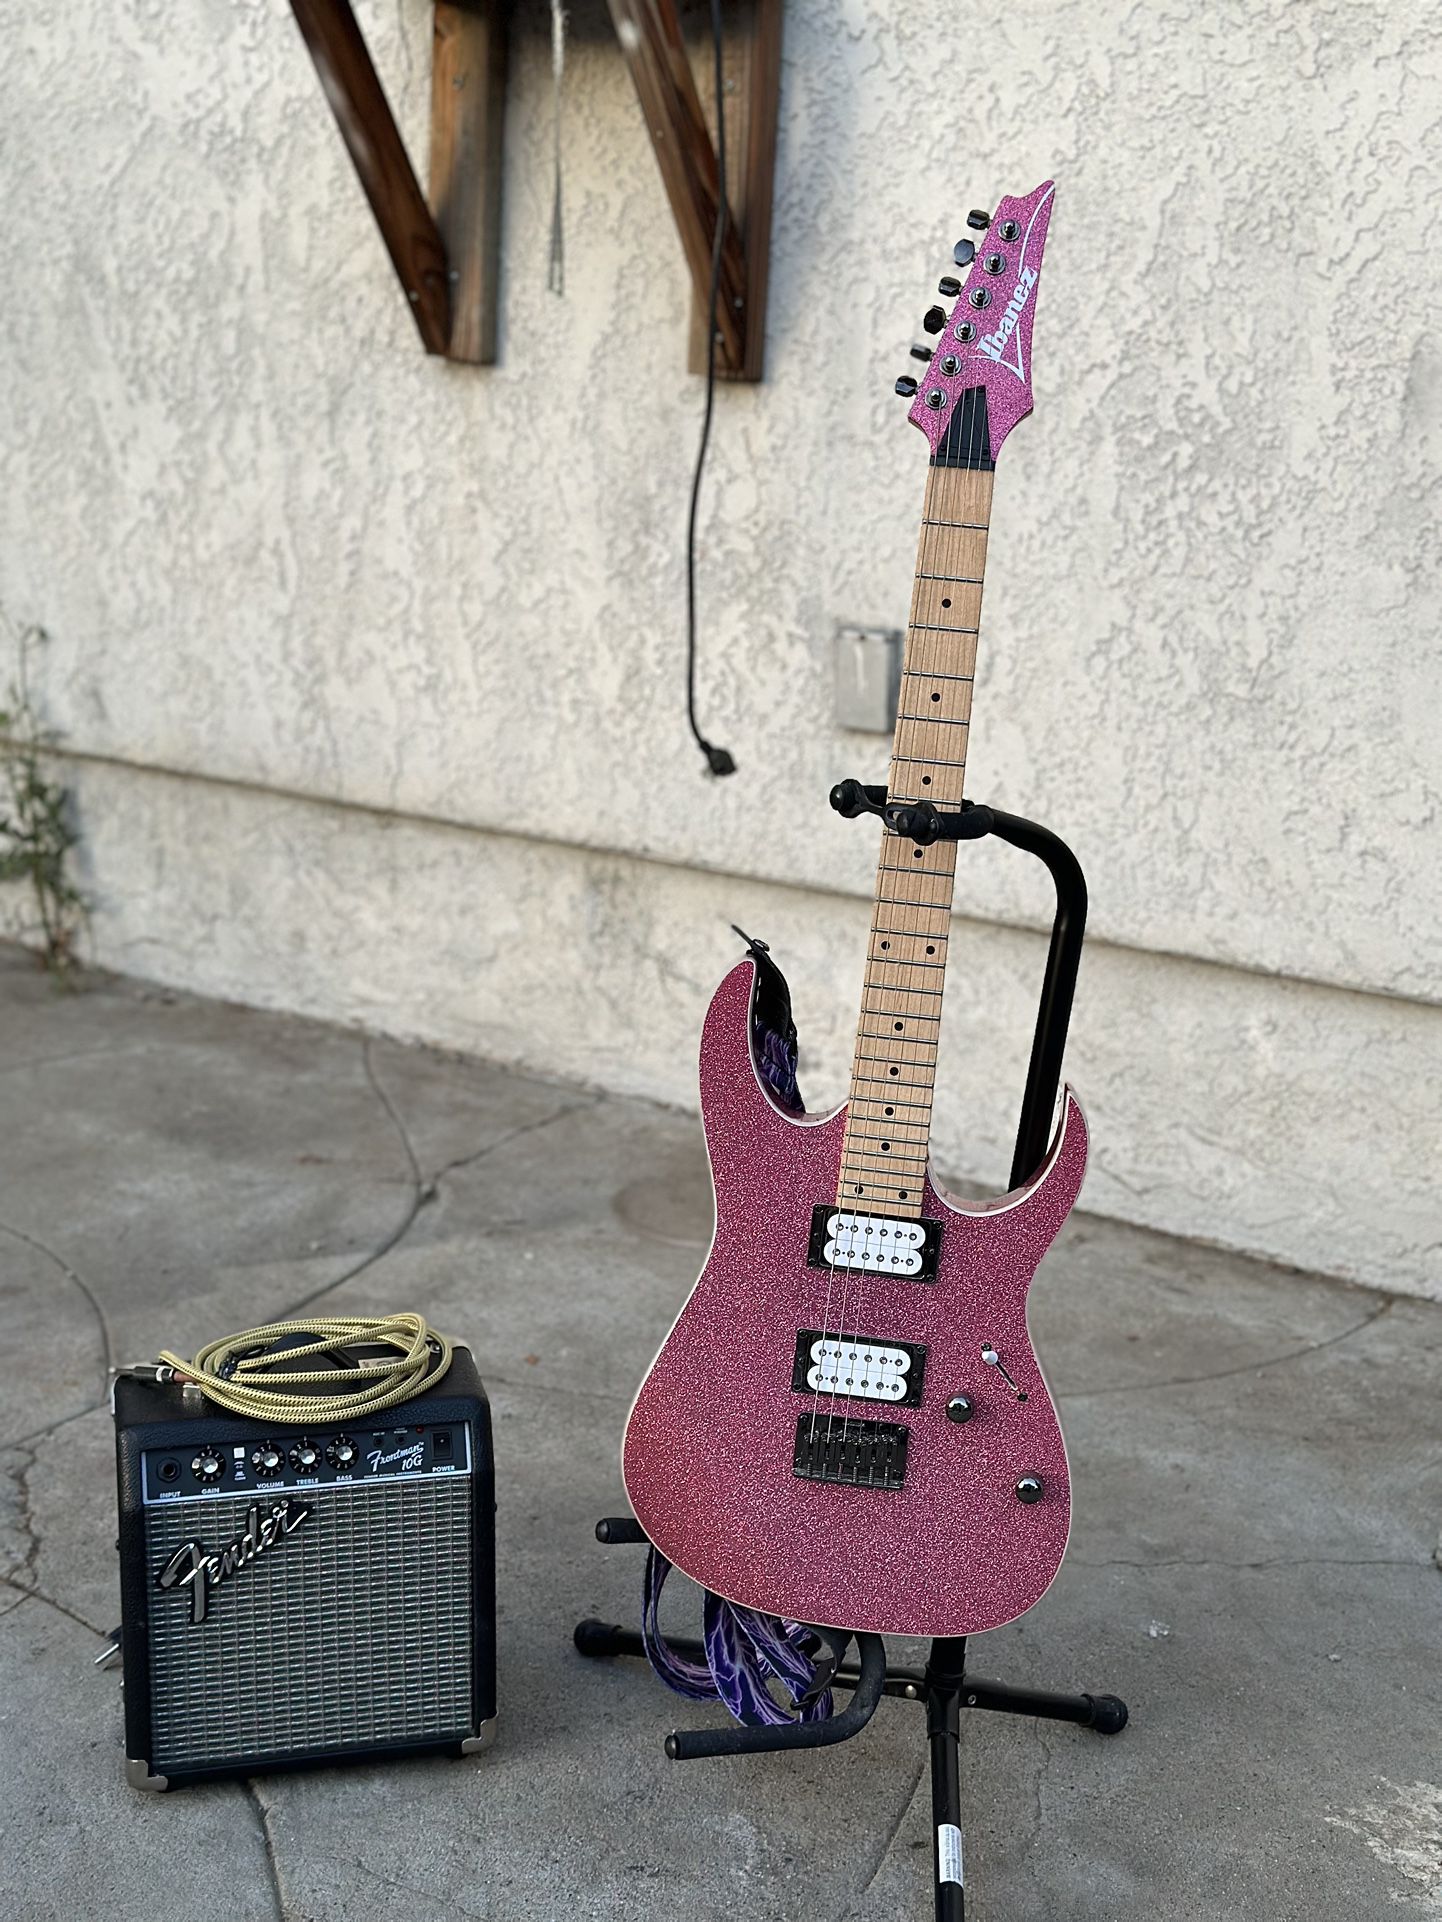 Ibanez Electric Guitar & Fender Amp Complete Set